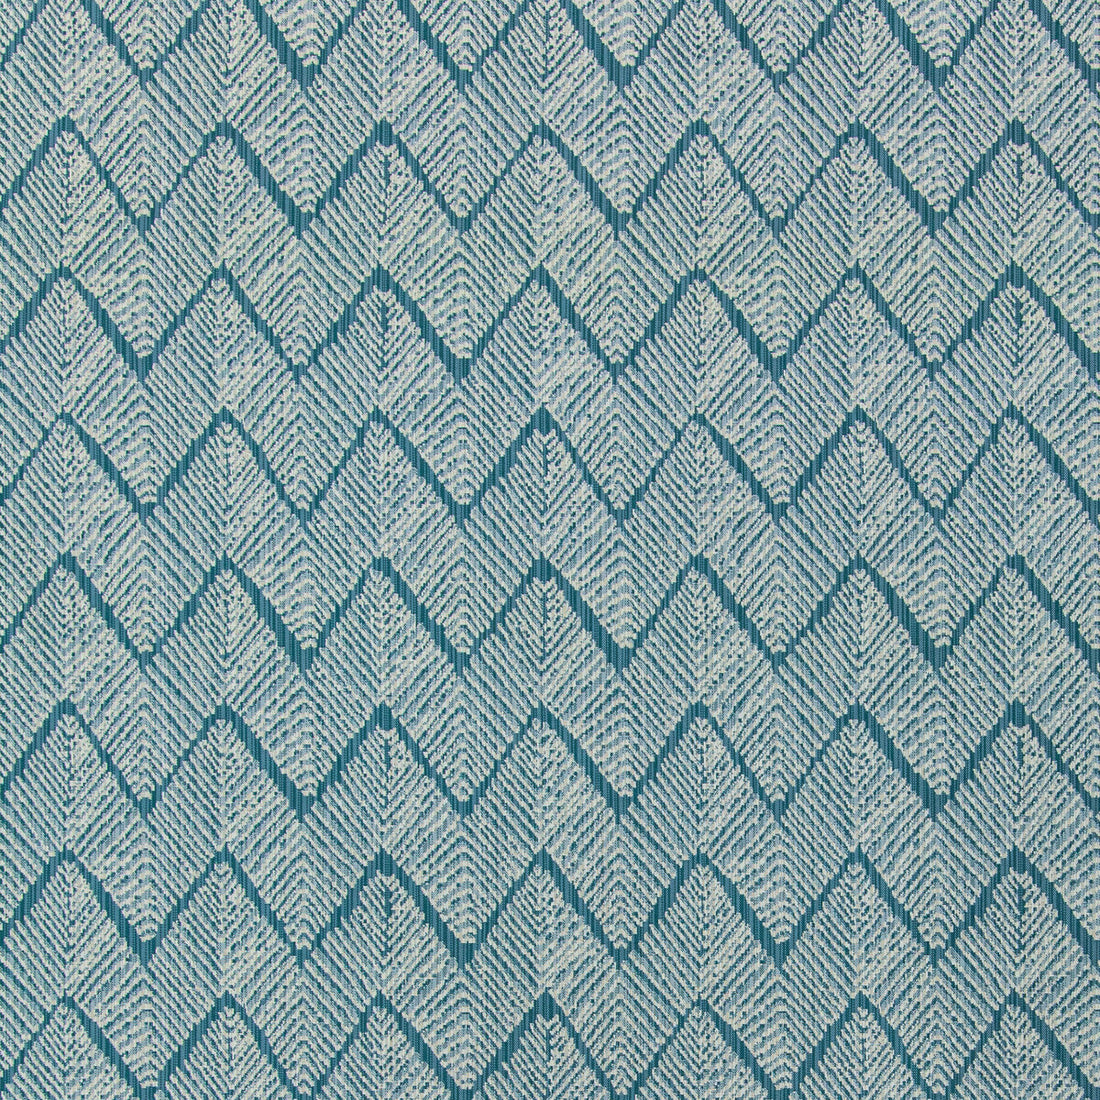 Breezaway fabric in oasis color - pattern 35830.35.0 - by Kravet Design in the Indoor / Outdoor collection